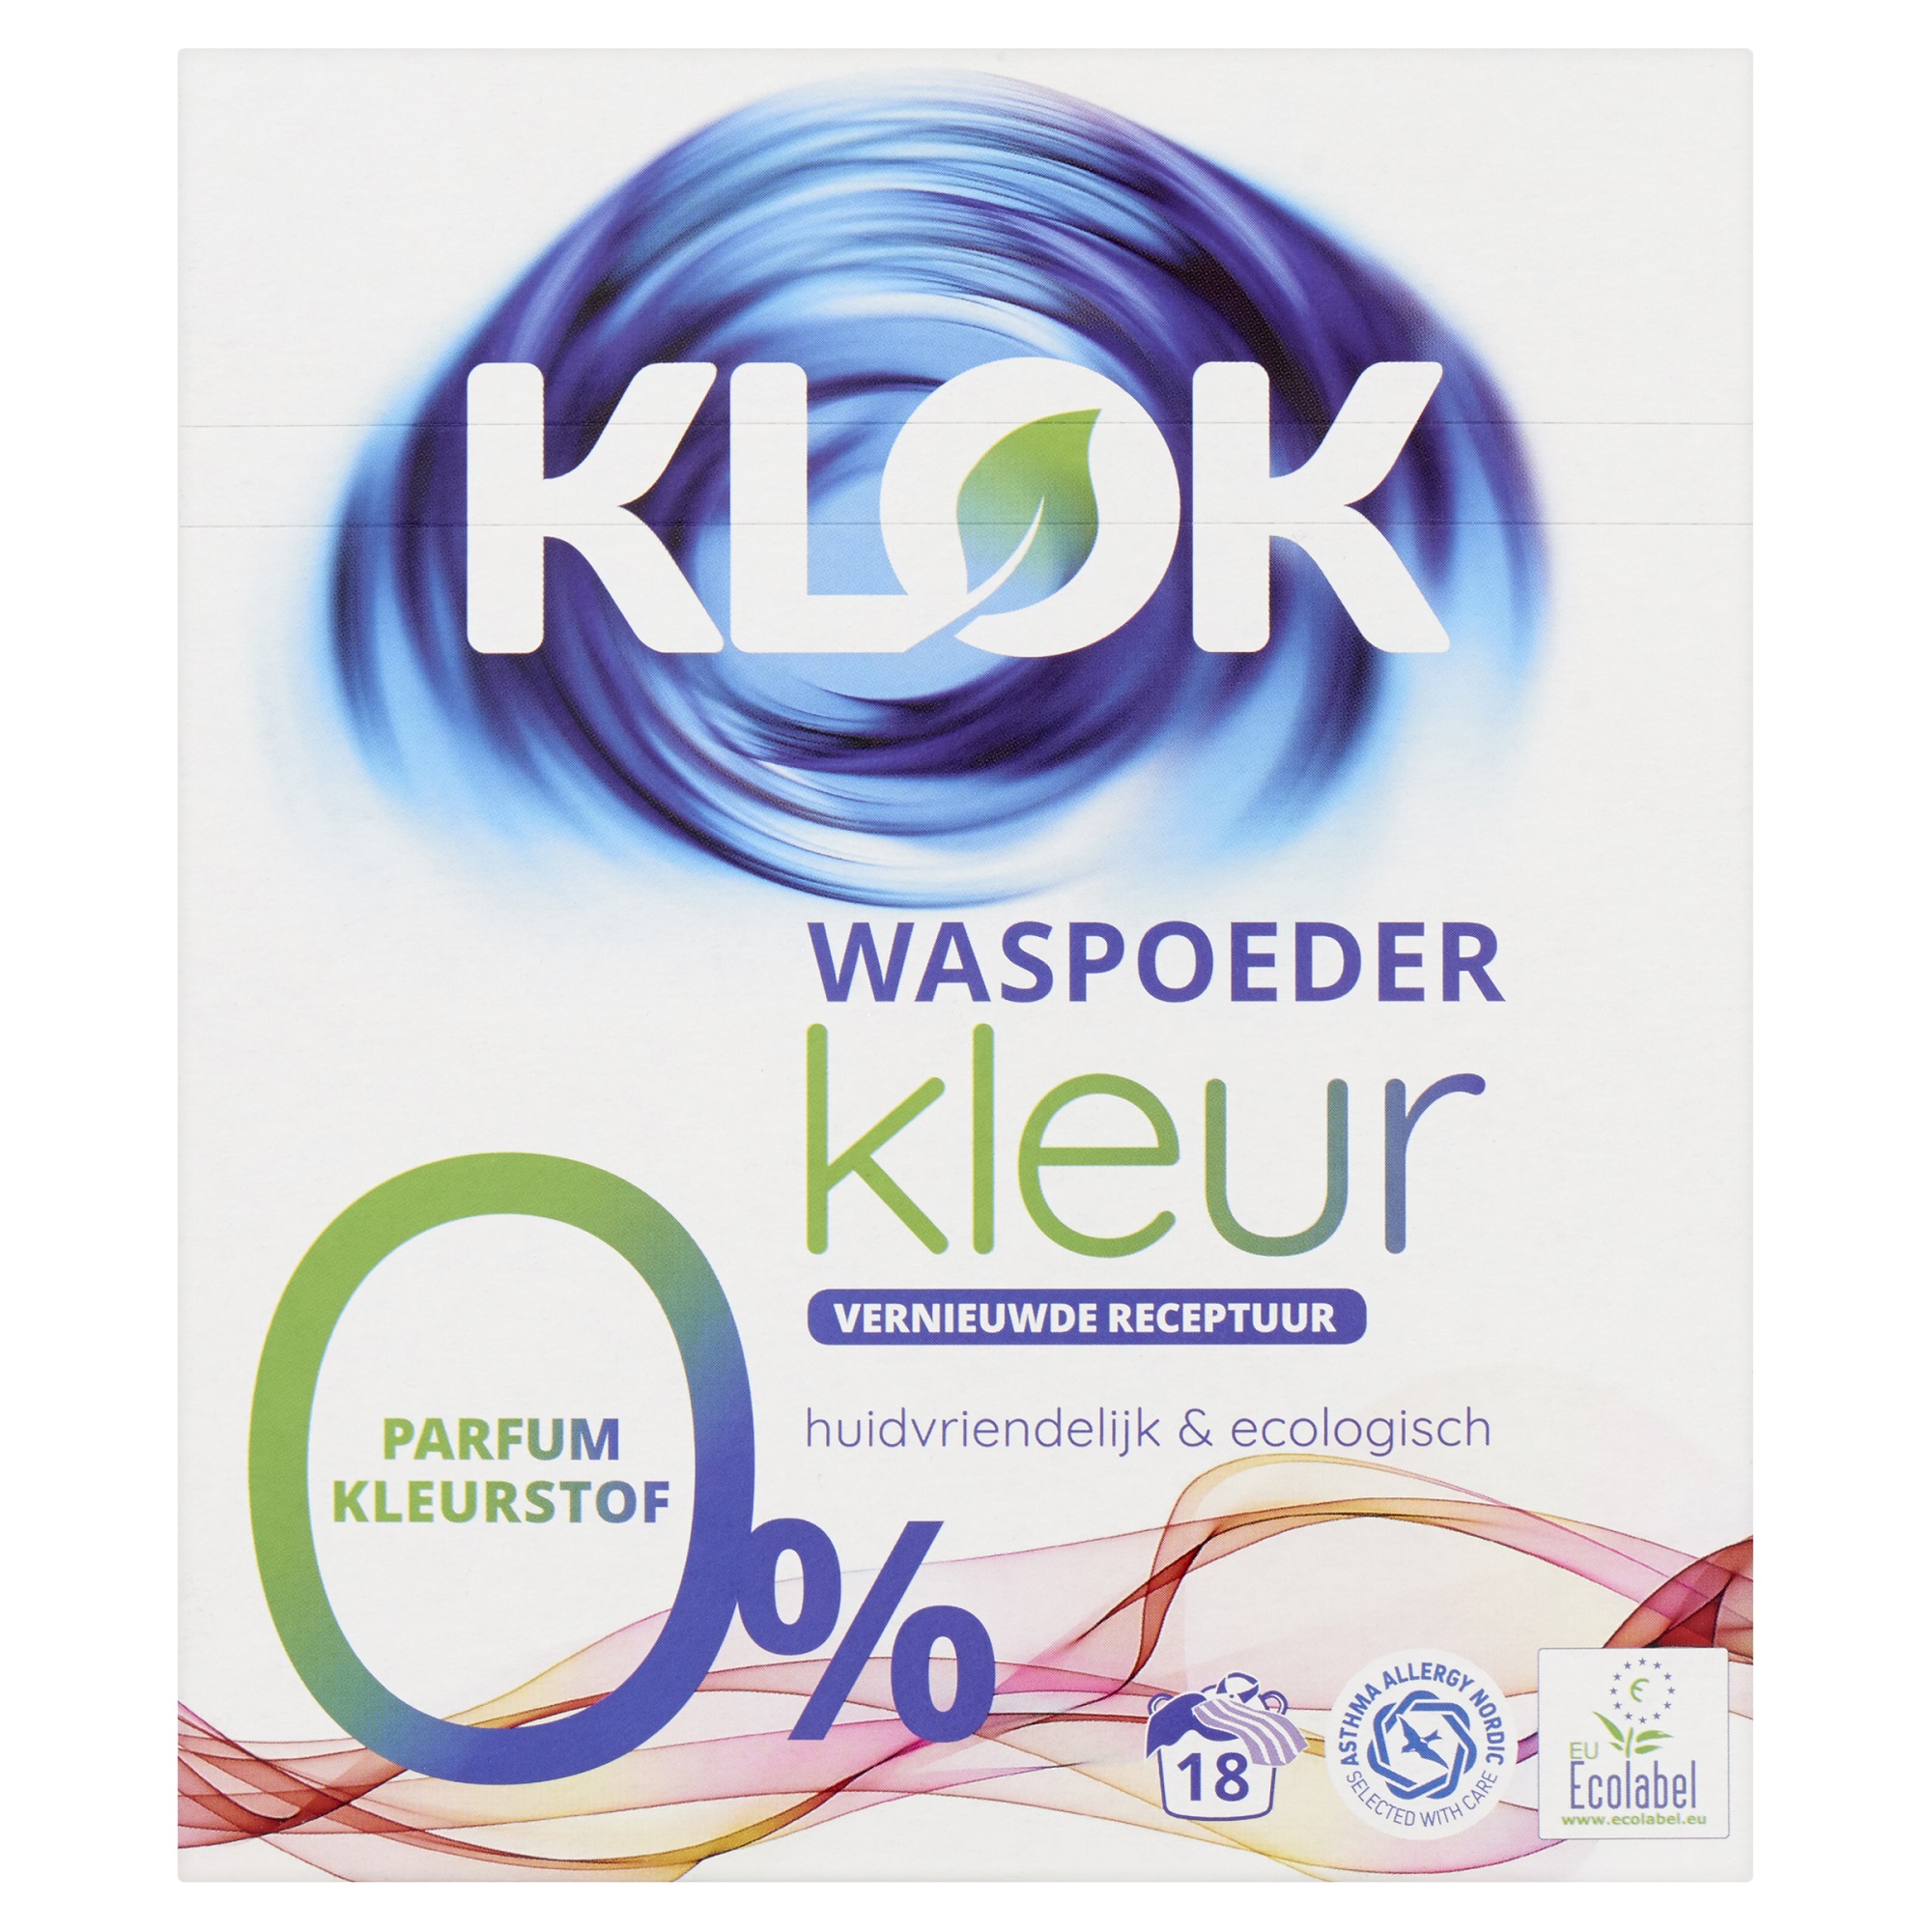 Detergent pudra pentru rufe colorate, 1.17 litri/18 spalari, Klok